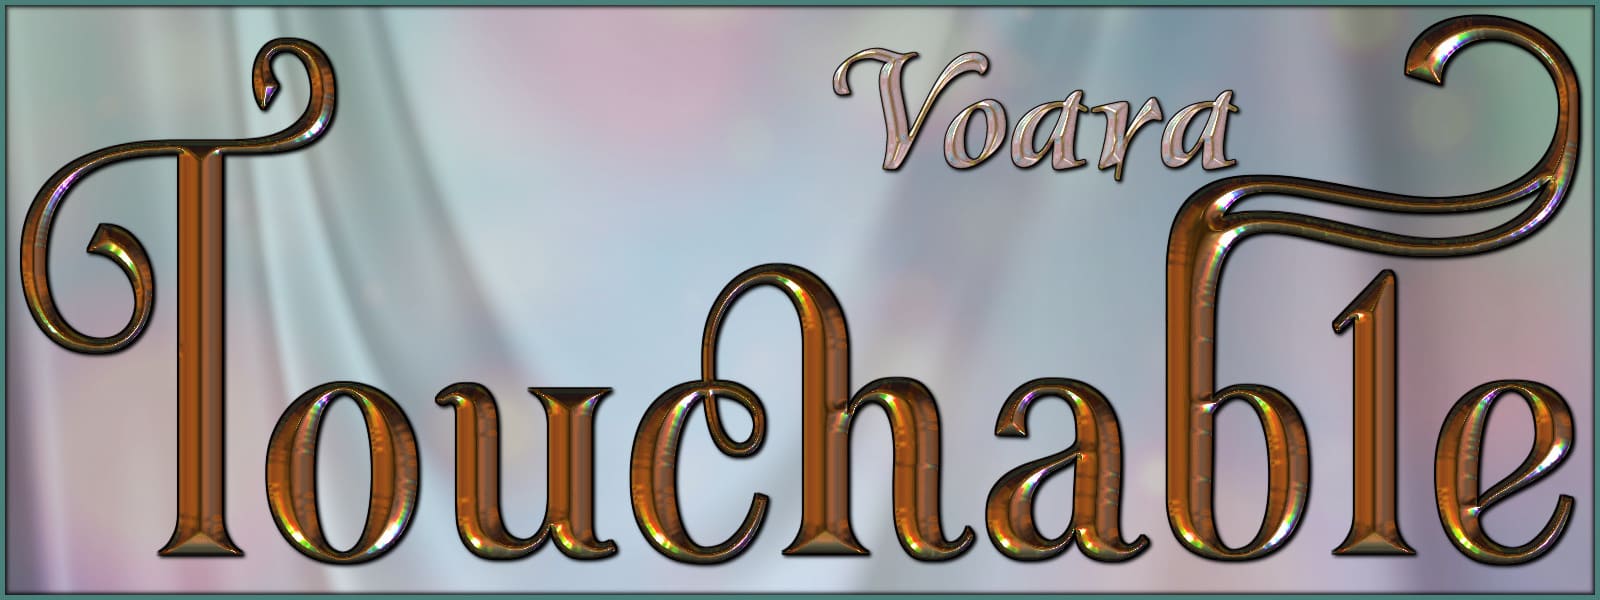 Touchable Voara G3G8_DAZ3D下载站